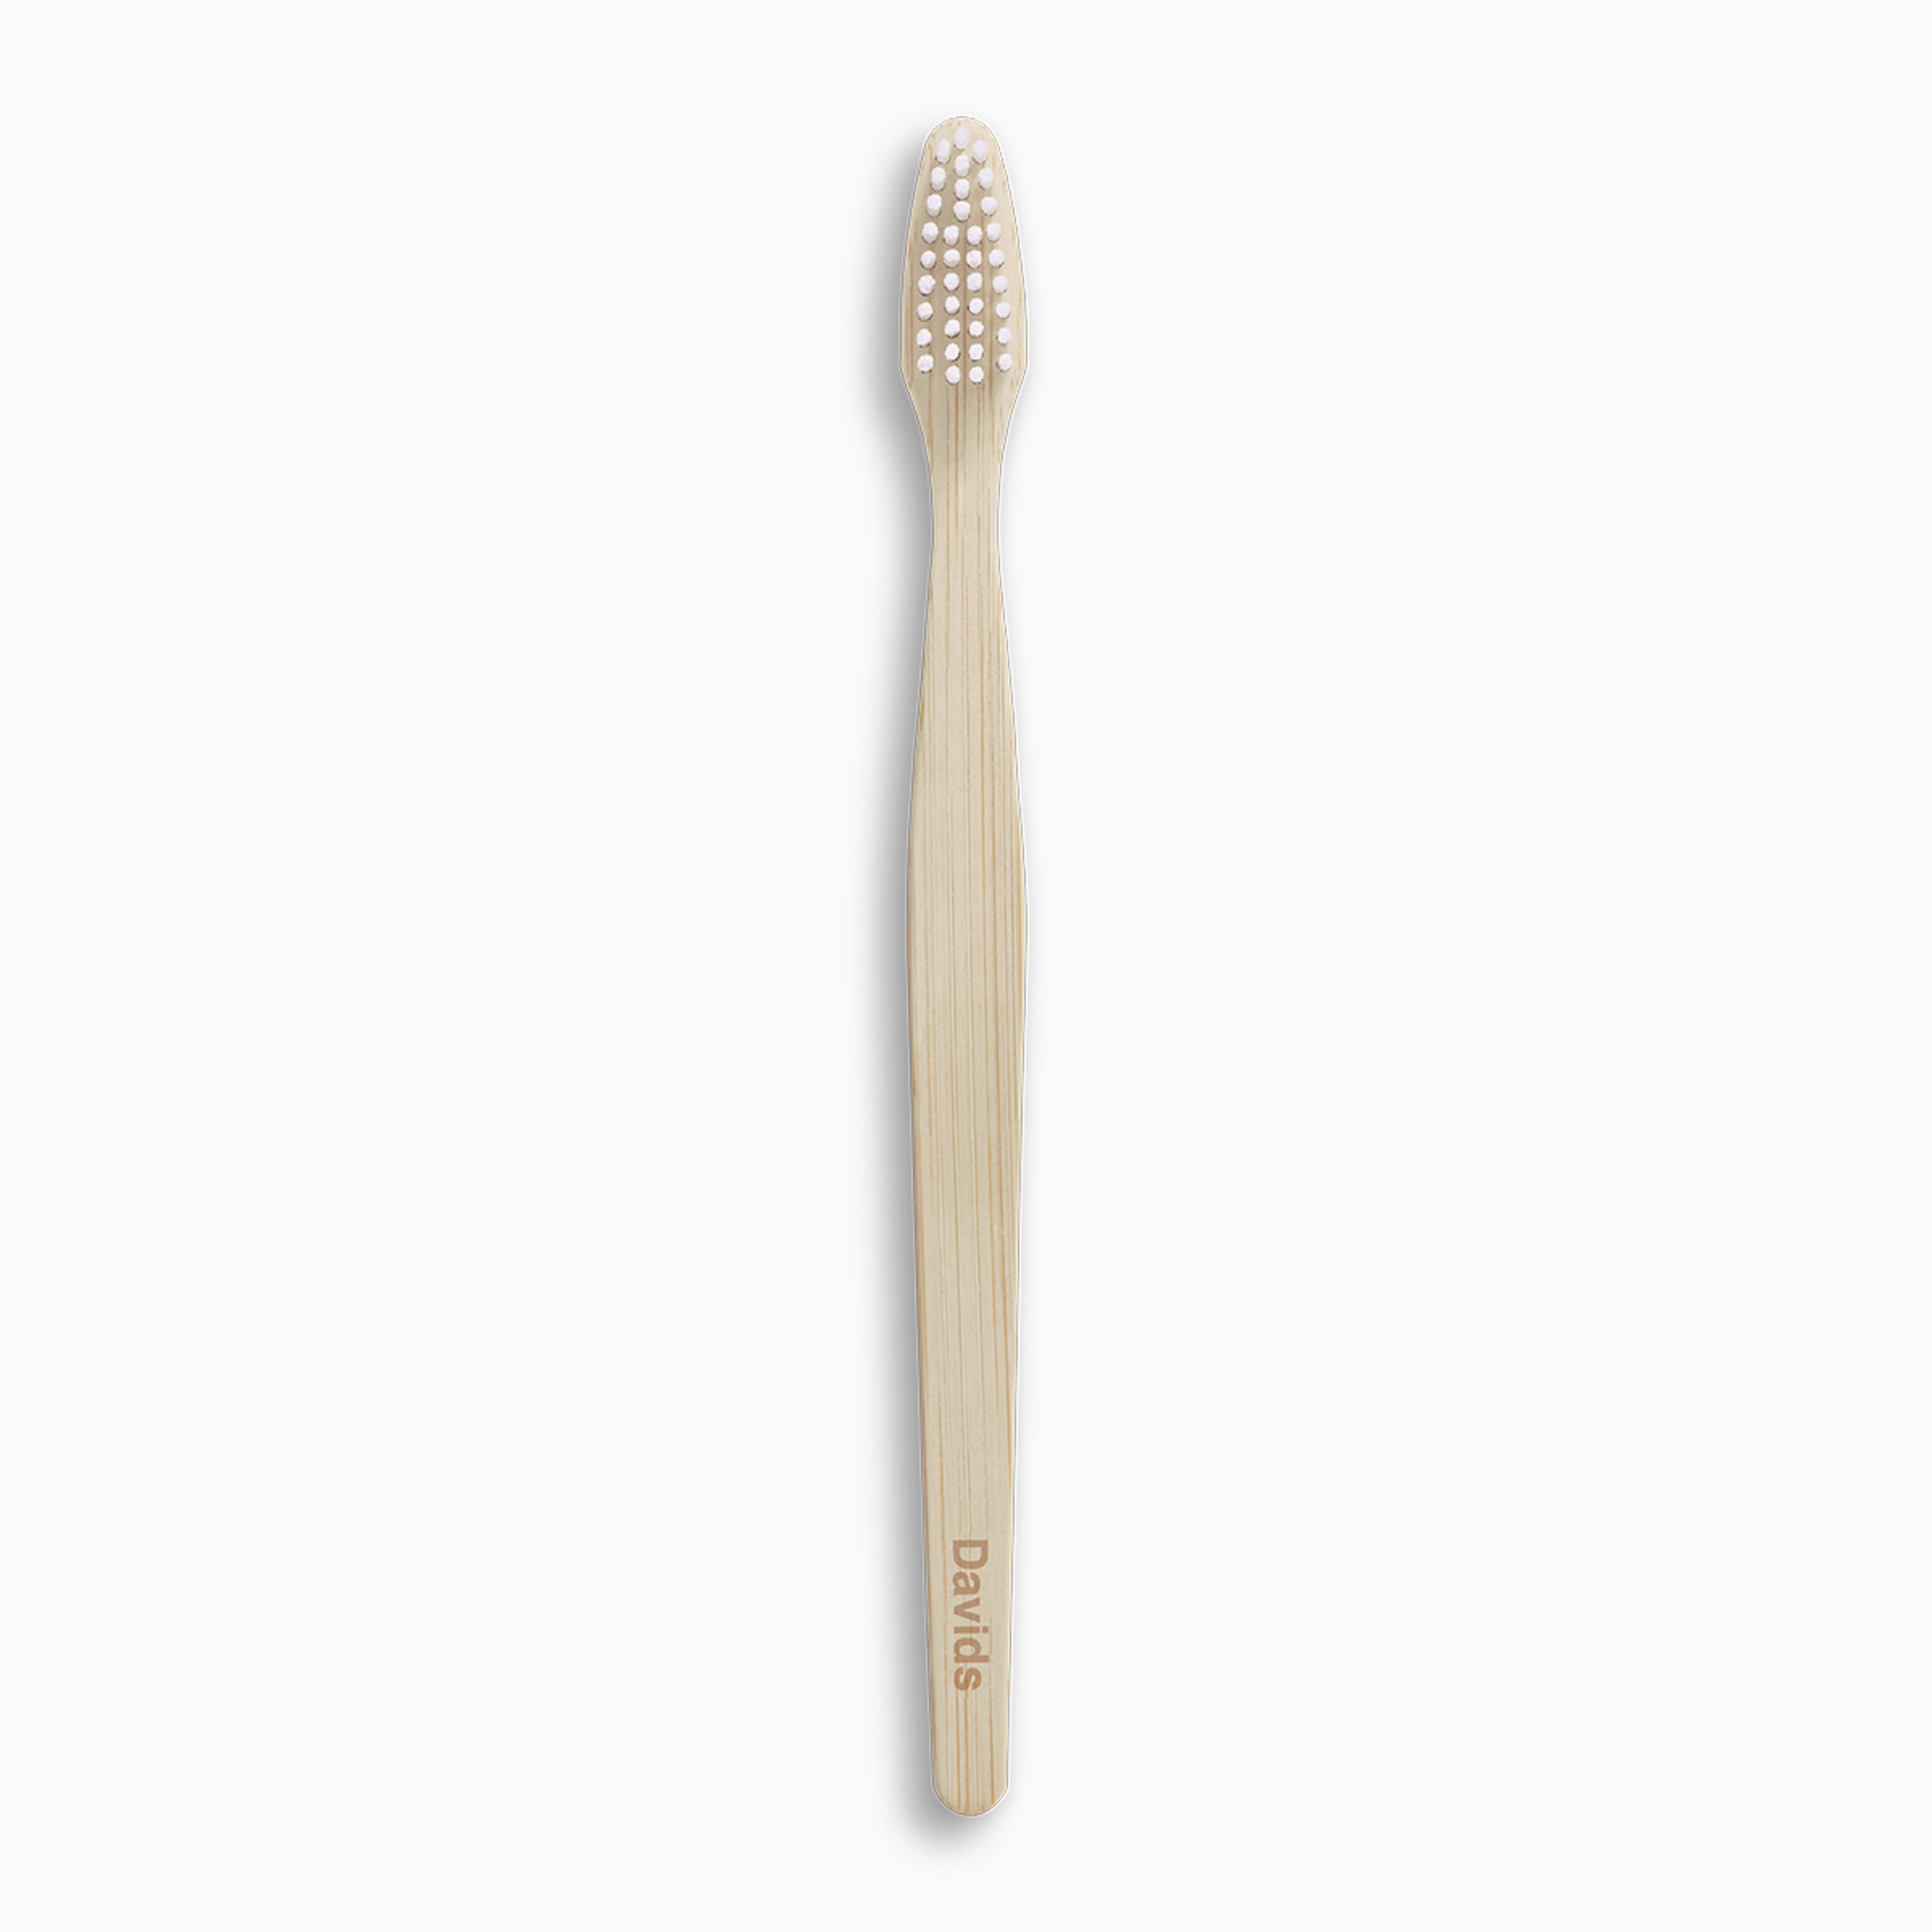 Davids premium bamboo toothbrush / adult soft